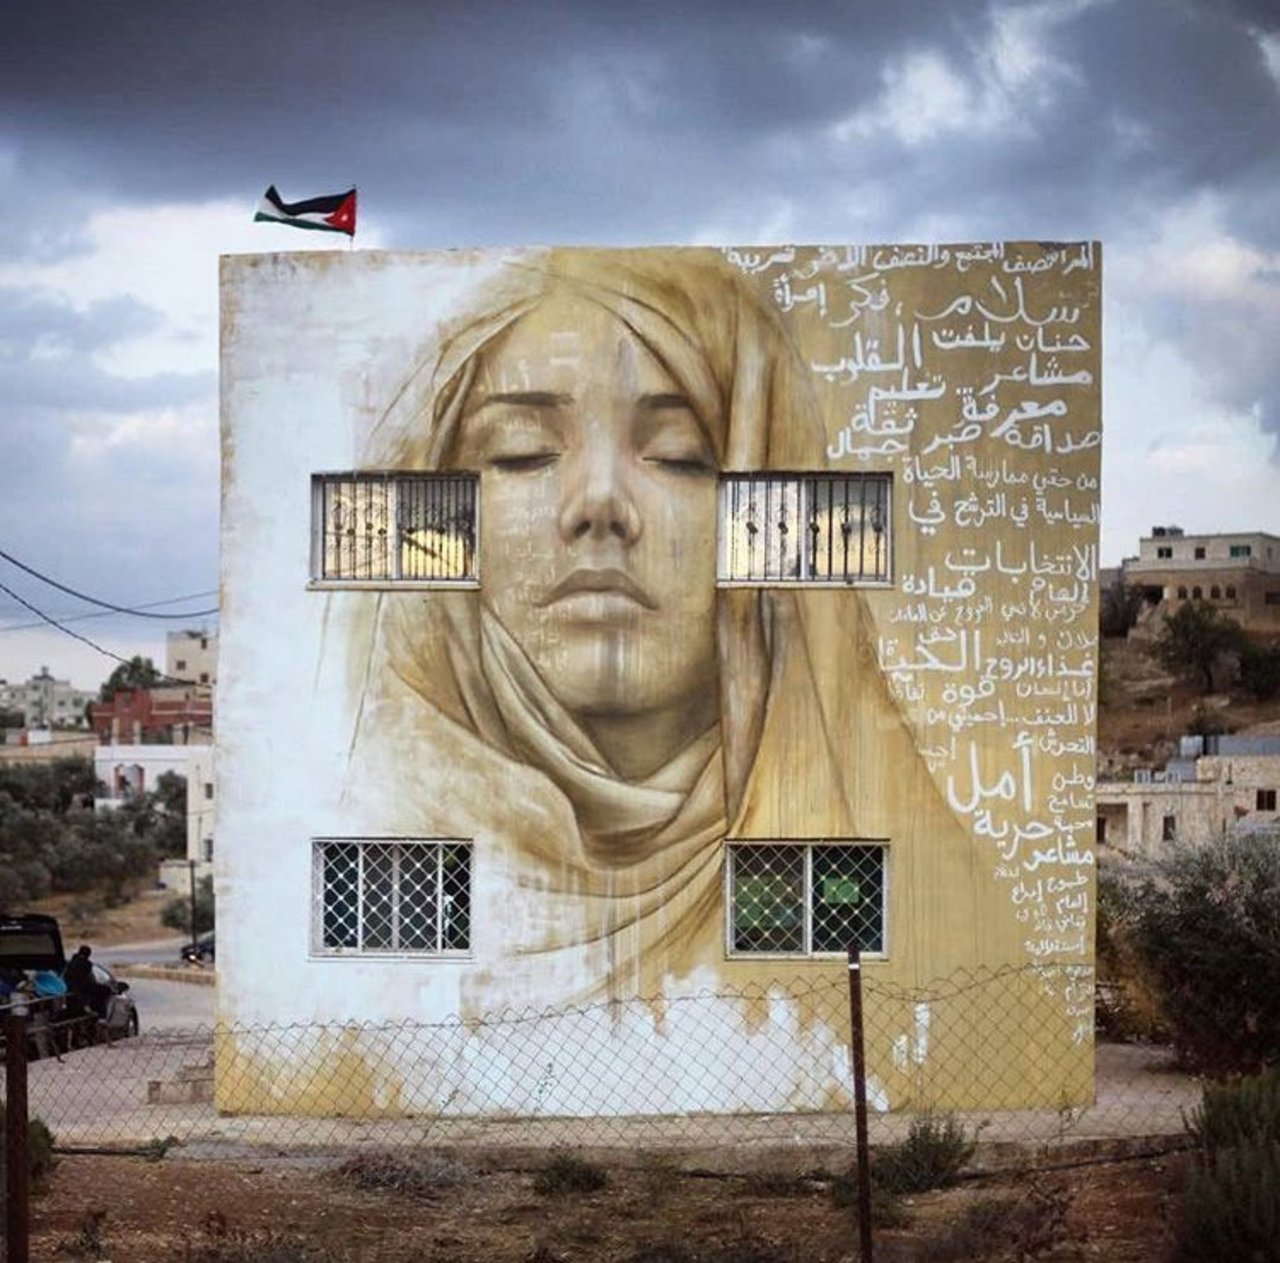 New Street Art by Jonathan Darby  Kharja, Irbid, Jordan 🇯🇴 #art #mural #graffiti #streetart https://t.co/b3kaJtl2xk